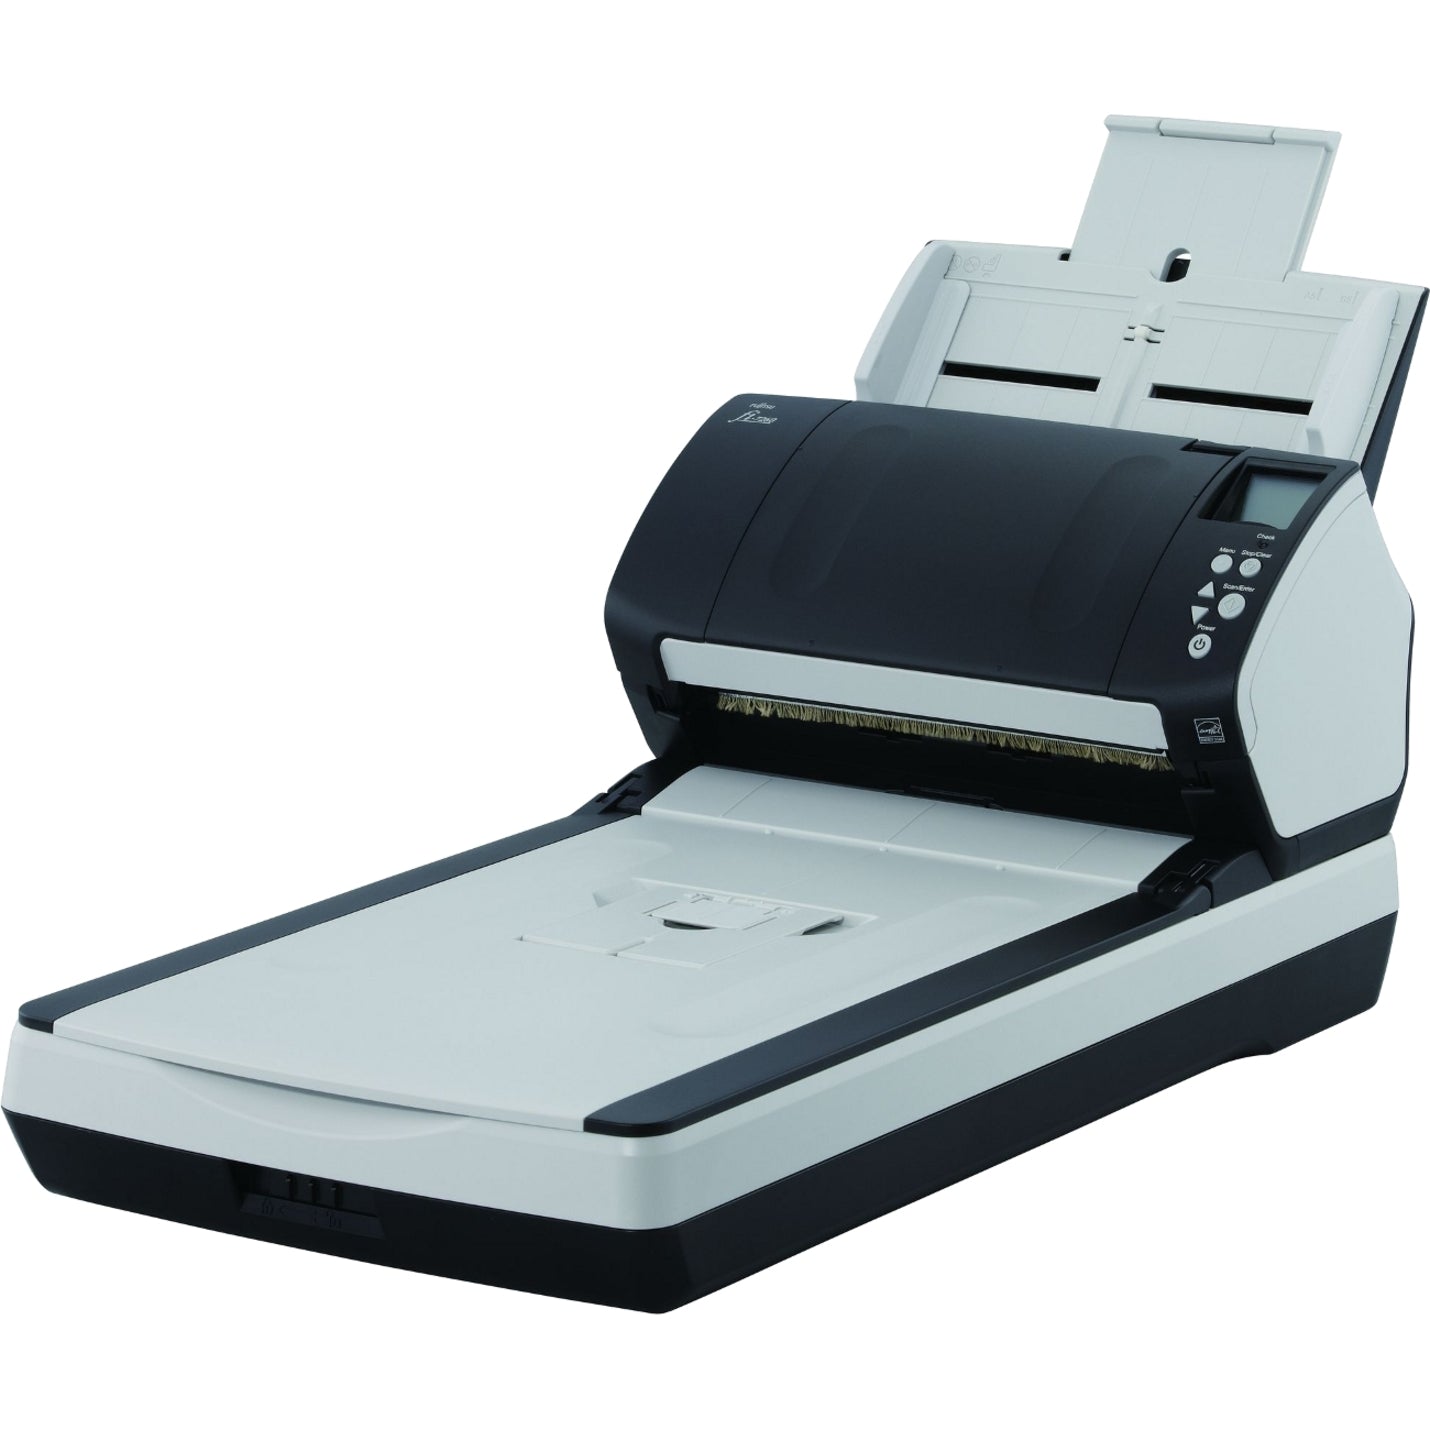 Fujitsu PA03670-B505 Fi-7280 Sheetfed/Flatbed Scanner, A4 Color Duplex Scanning